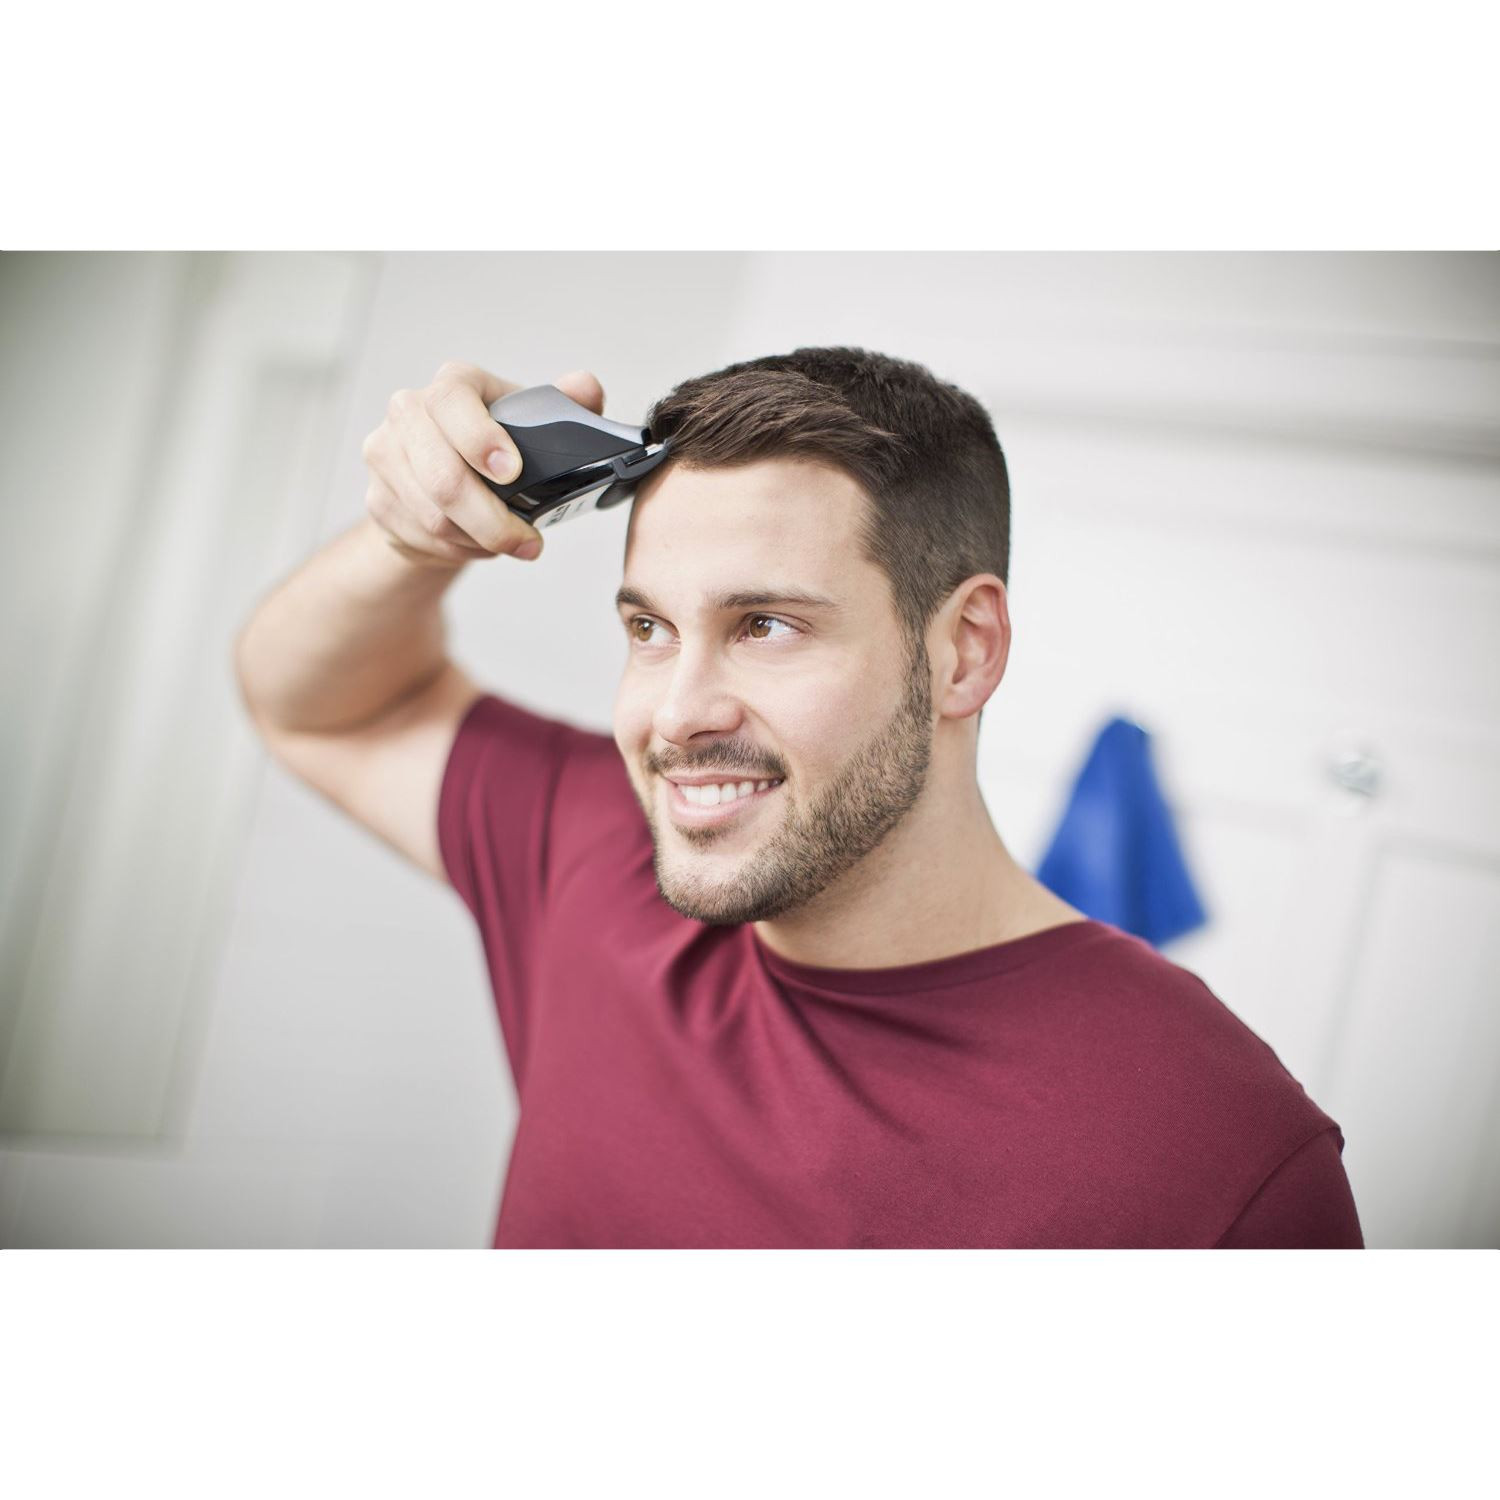 DIY Haircut Mens
 Remington Men Quick Cut Home DIY Hair Clipper Rechargeable